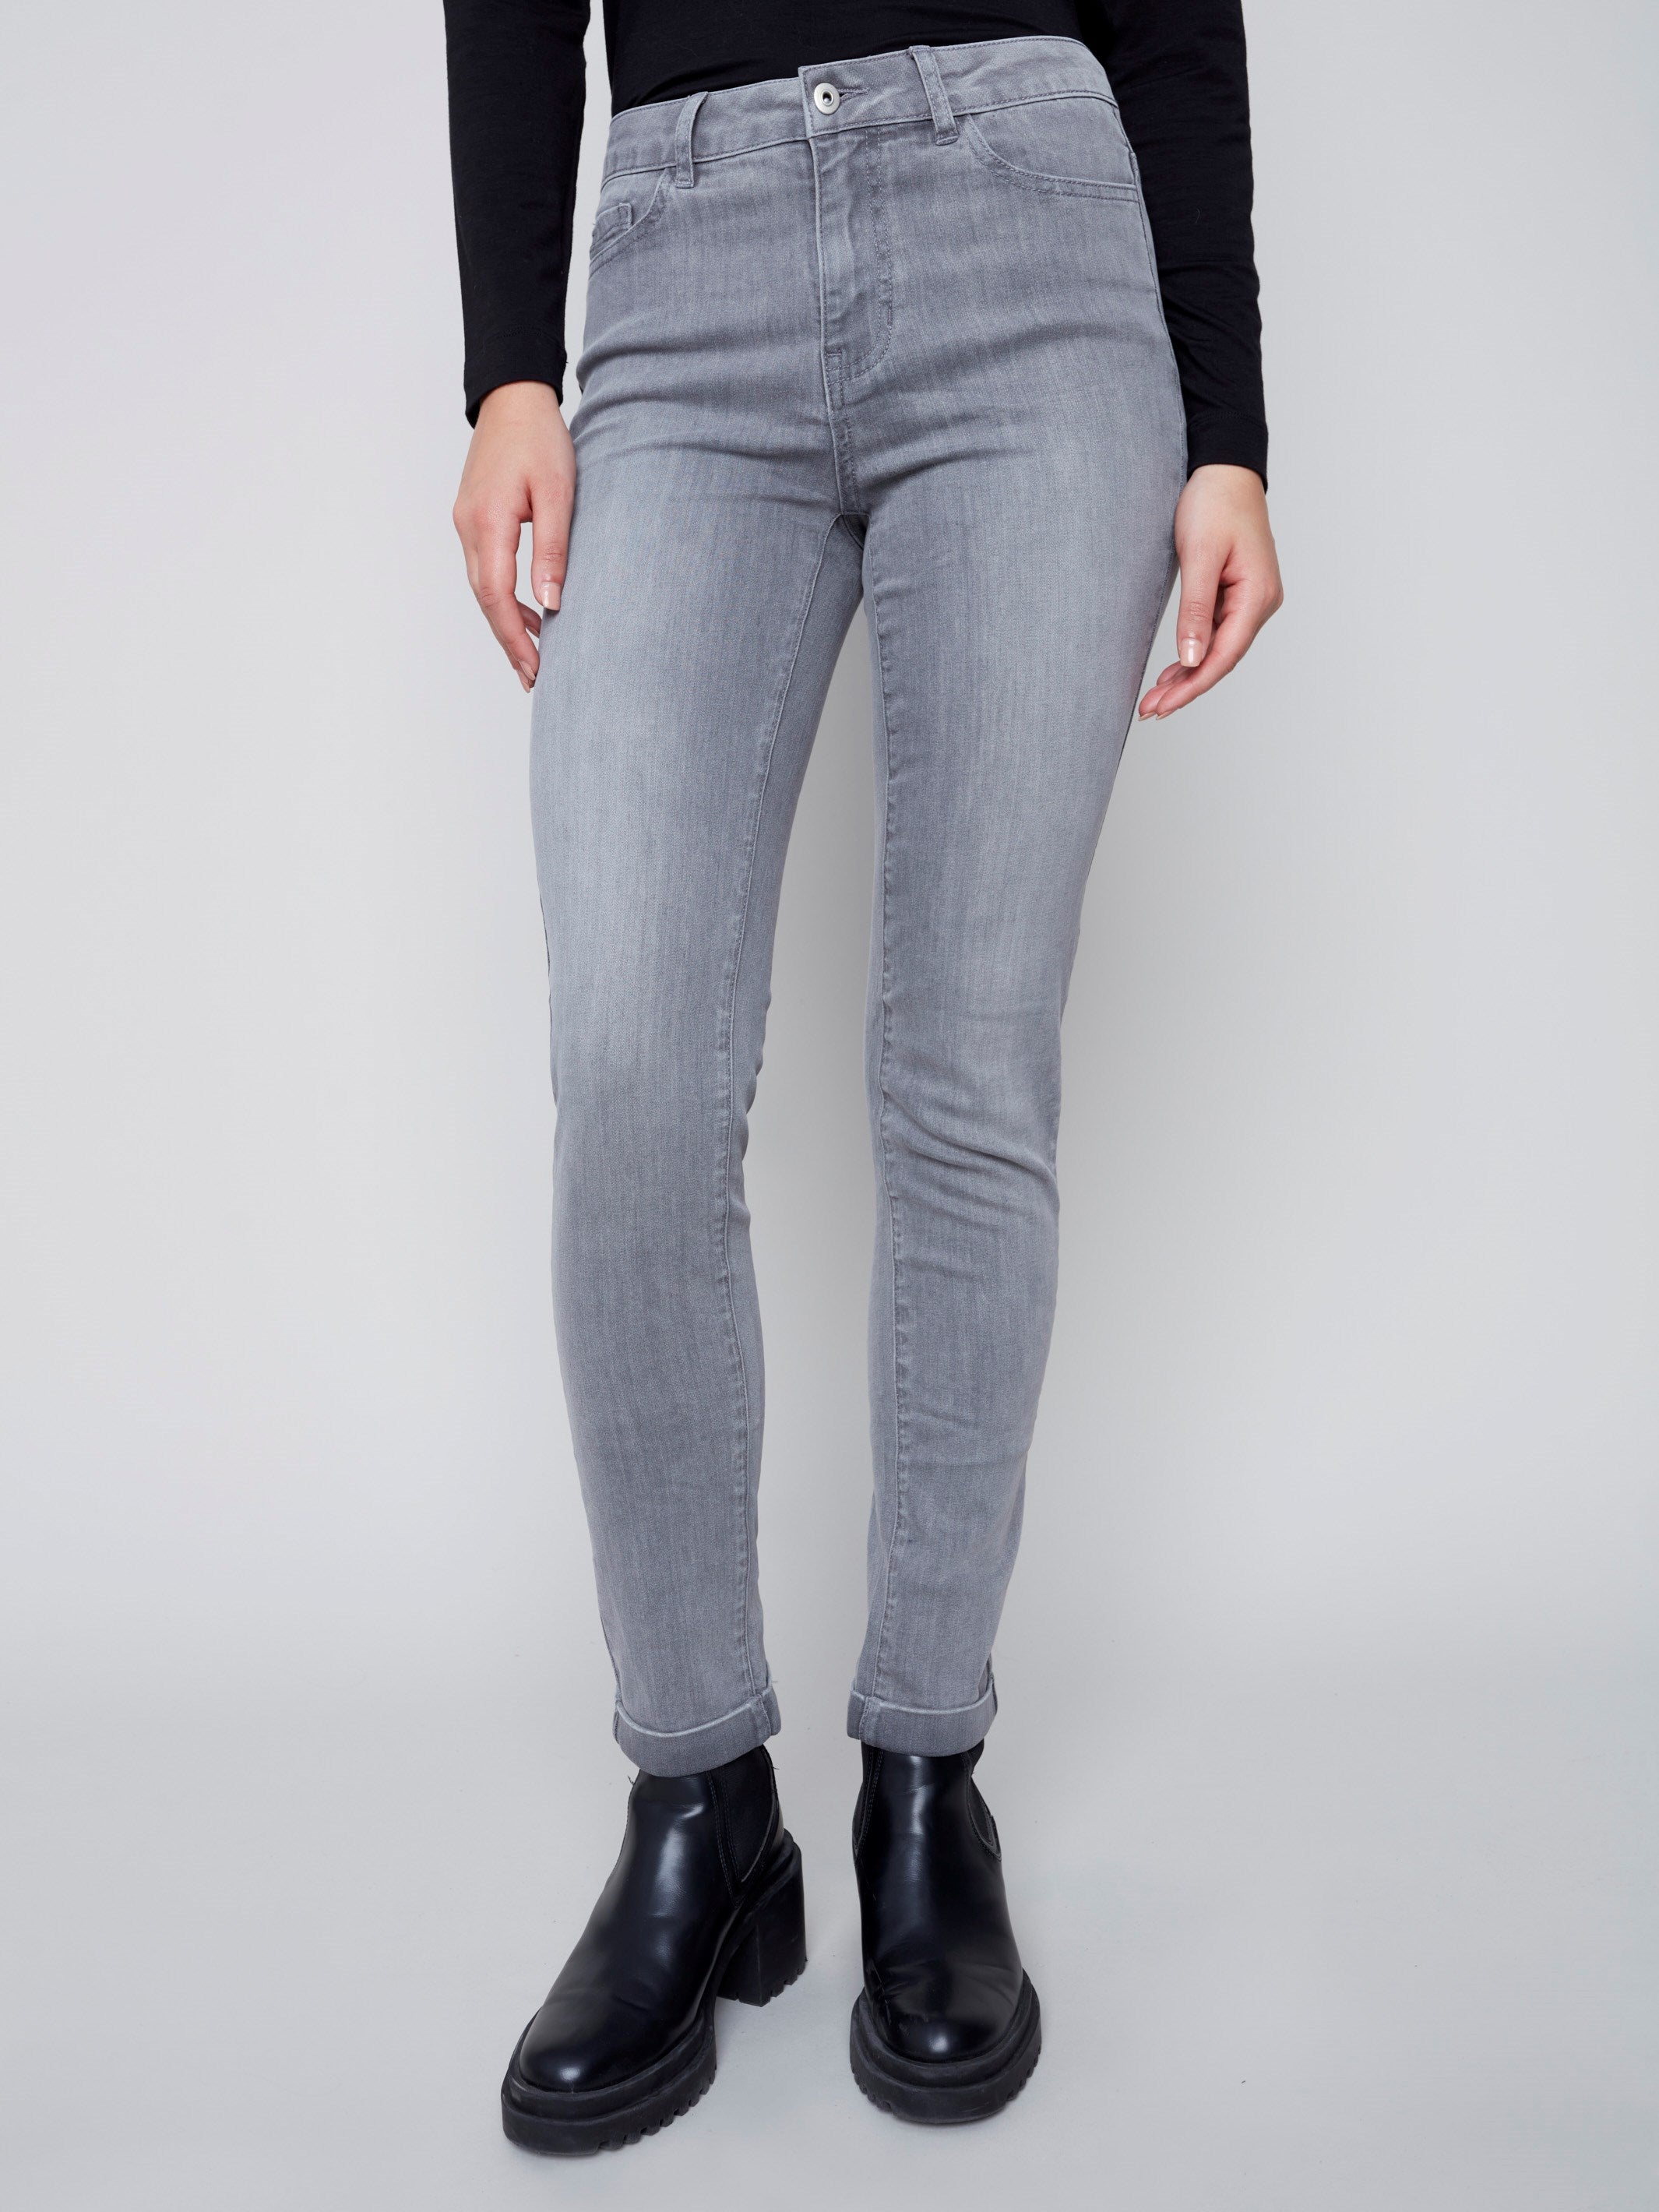 Cuffed Hem Jeans - Soft Grey